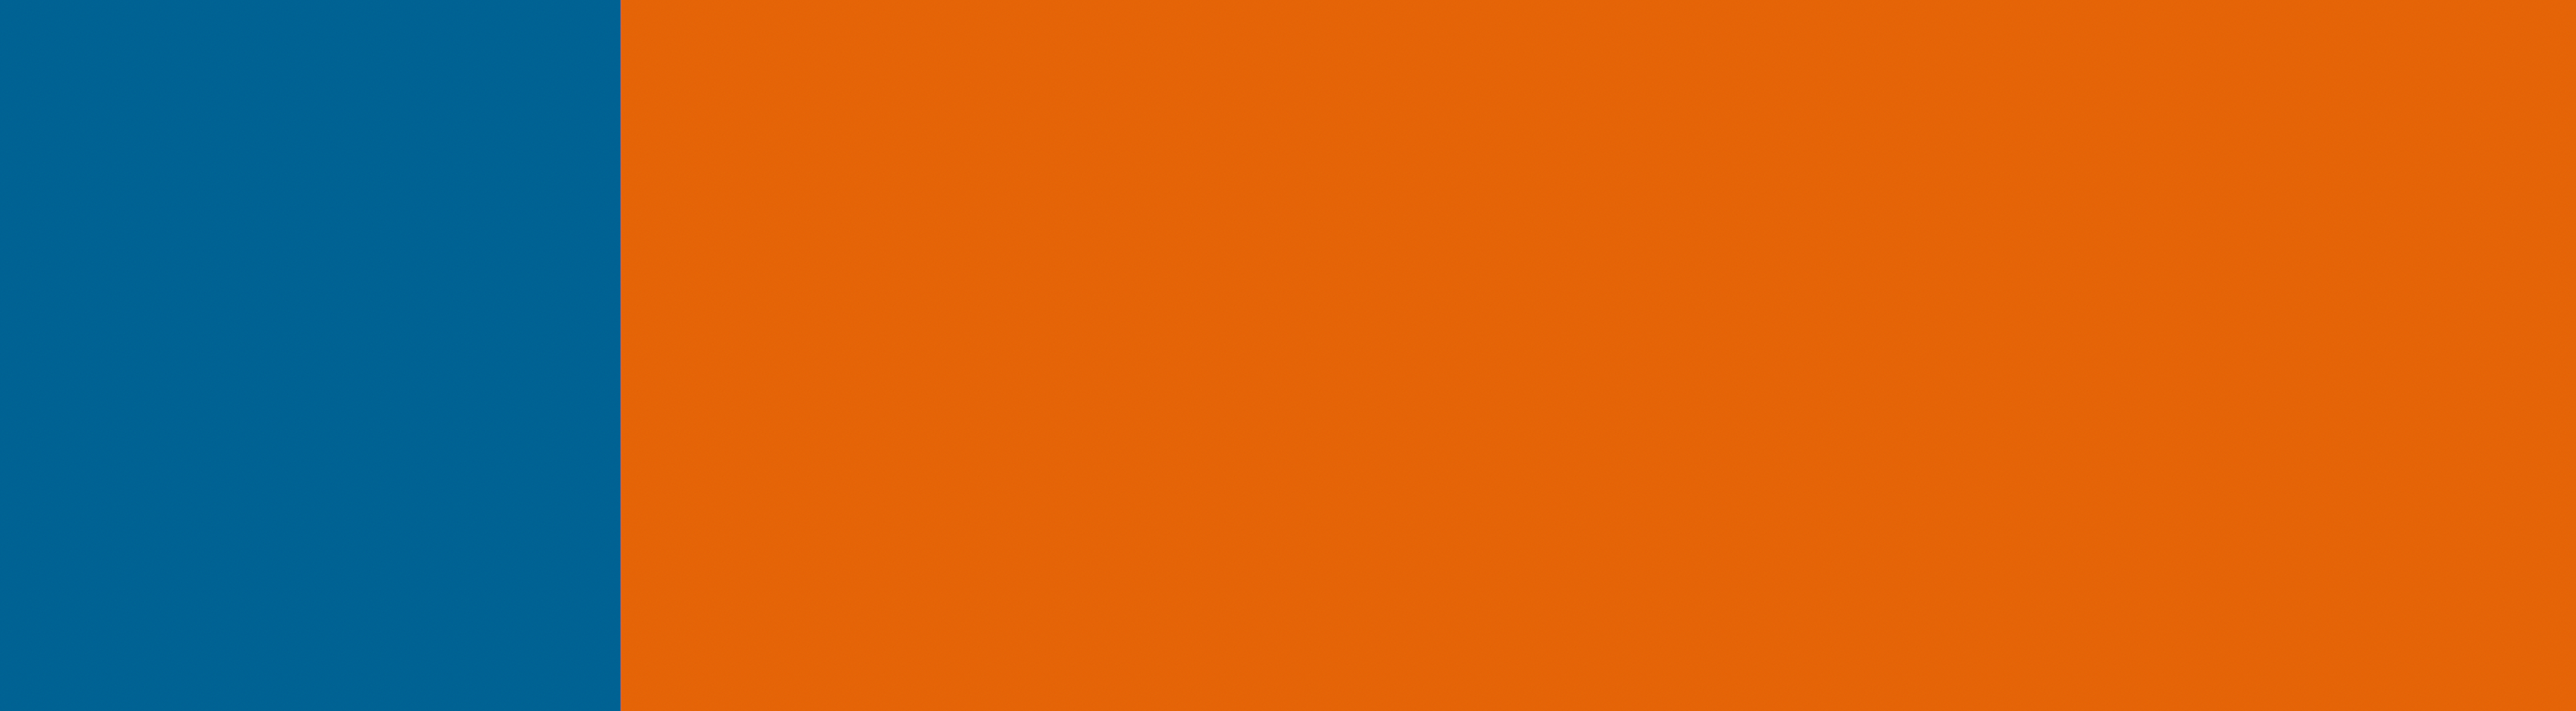 Banner_Aktuelles_Blau_Orange